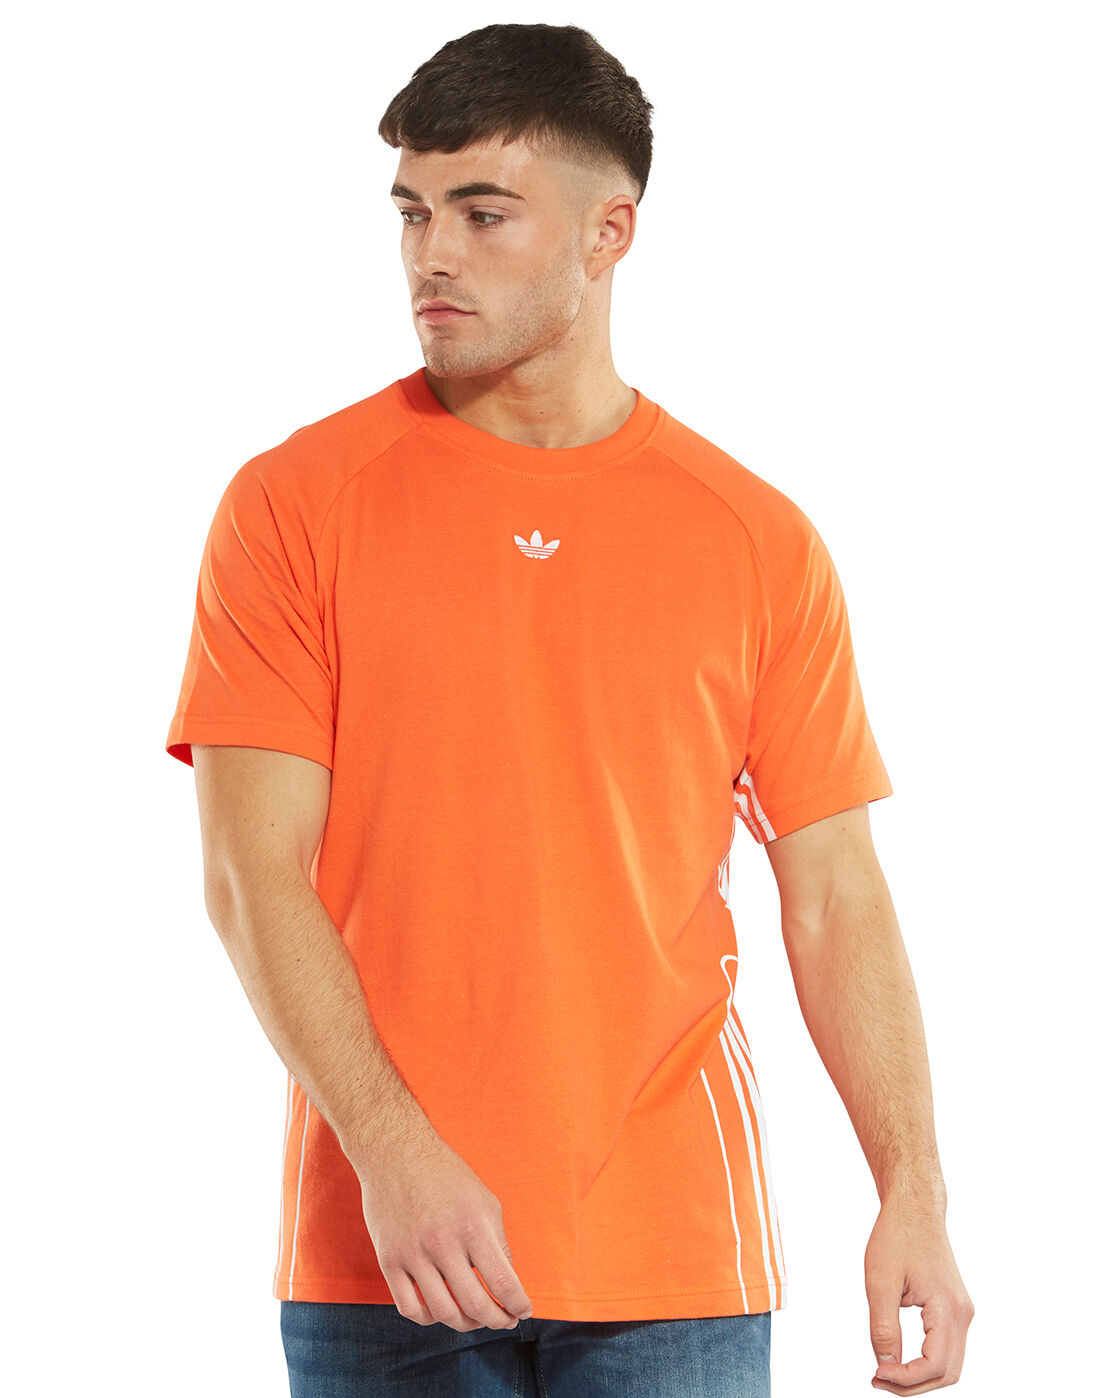 orange adidas shirt mens